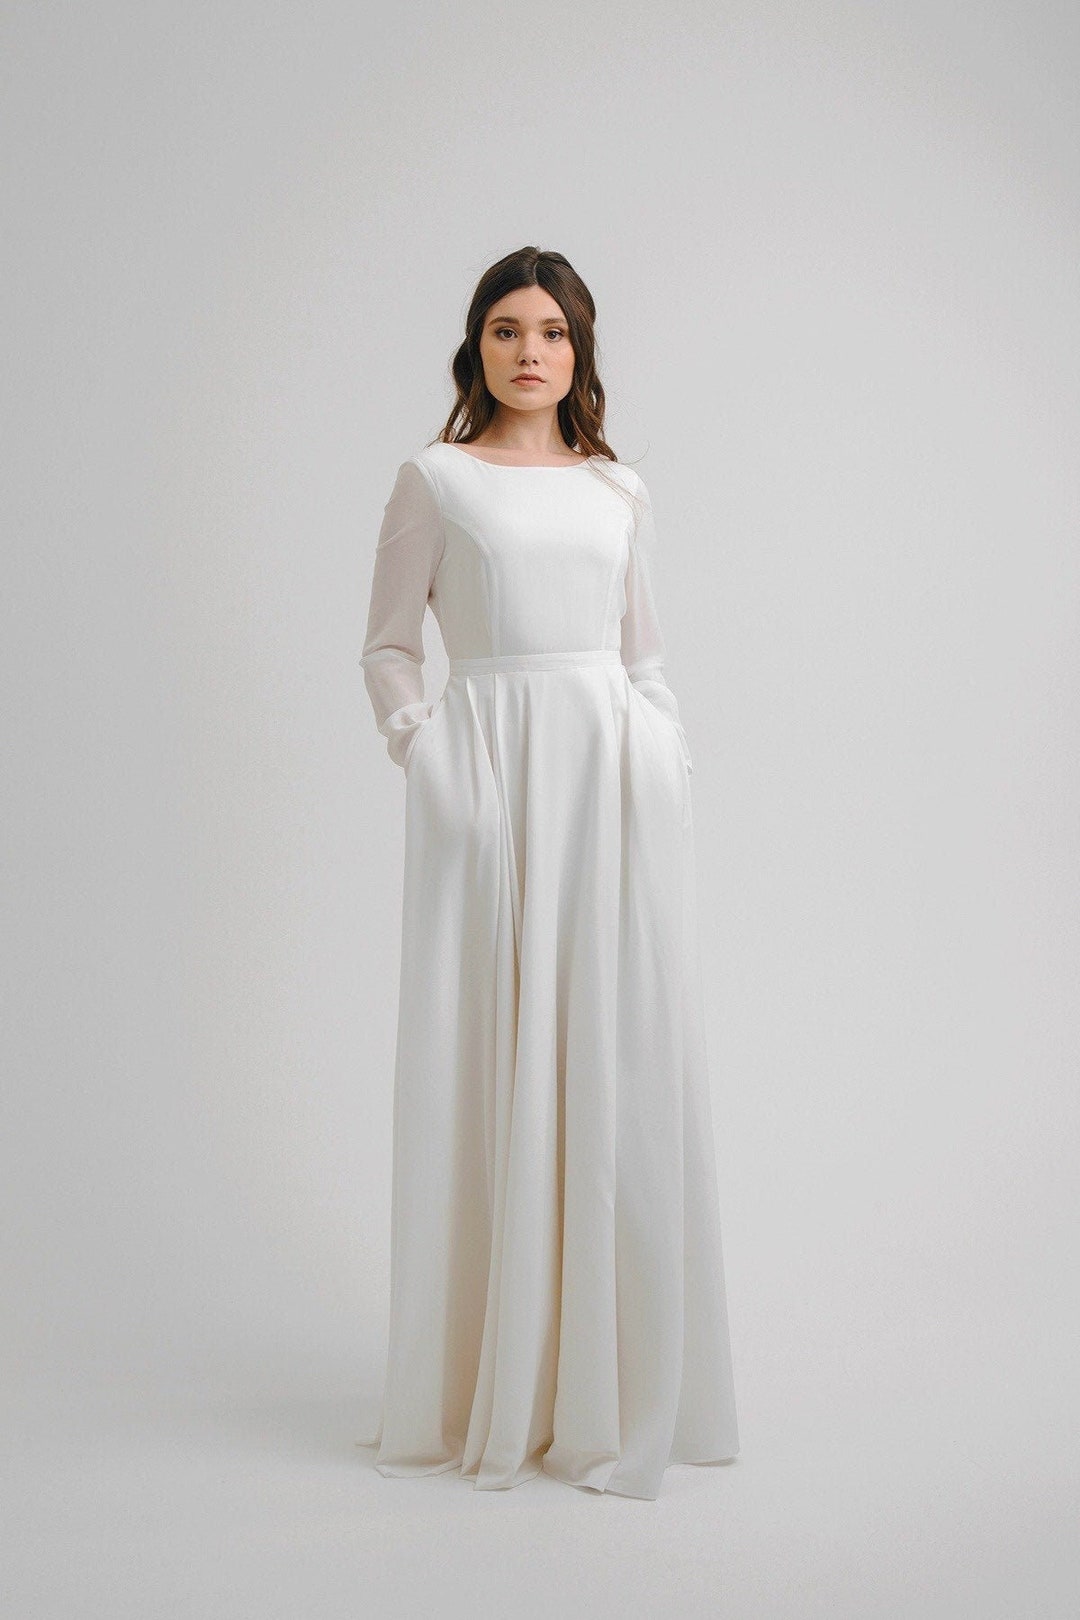 Modest Wedding Dress A-line Dress Long Sleeve Wedding Dress - Etsy